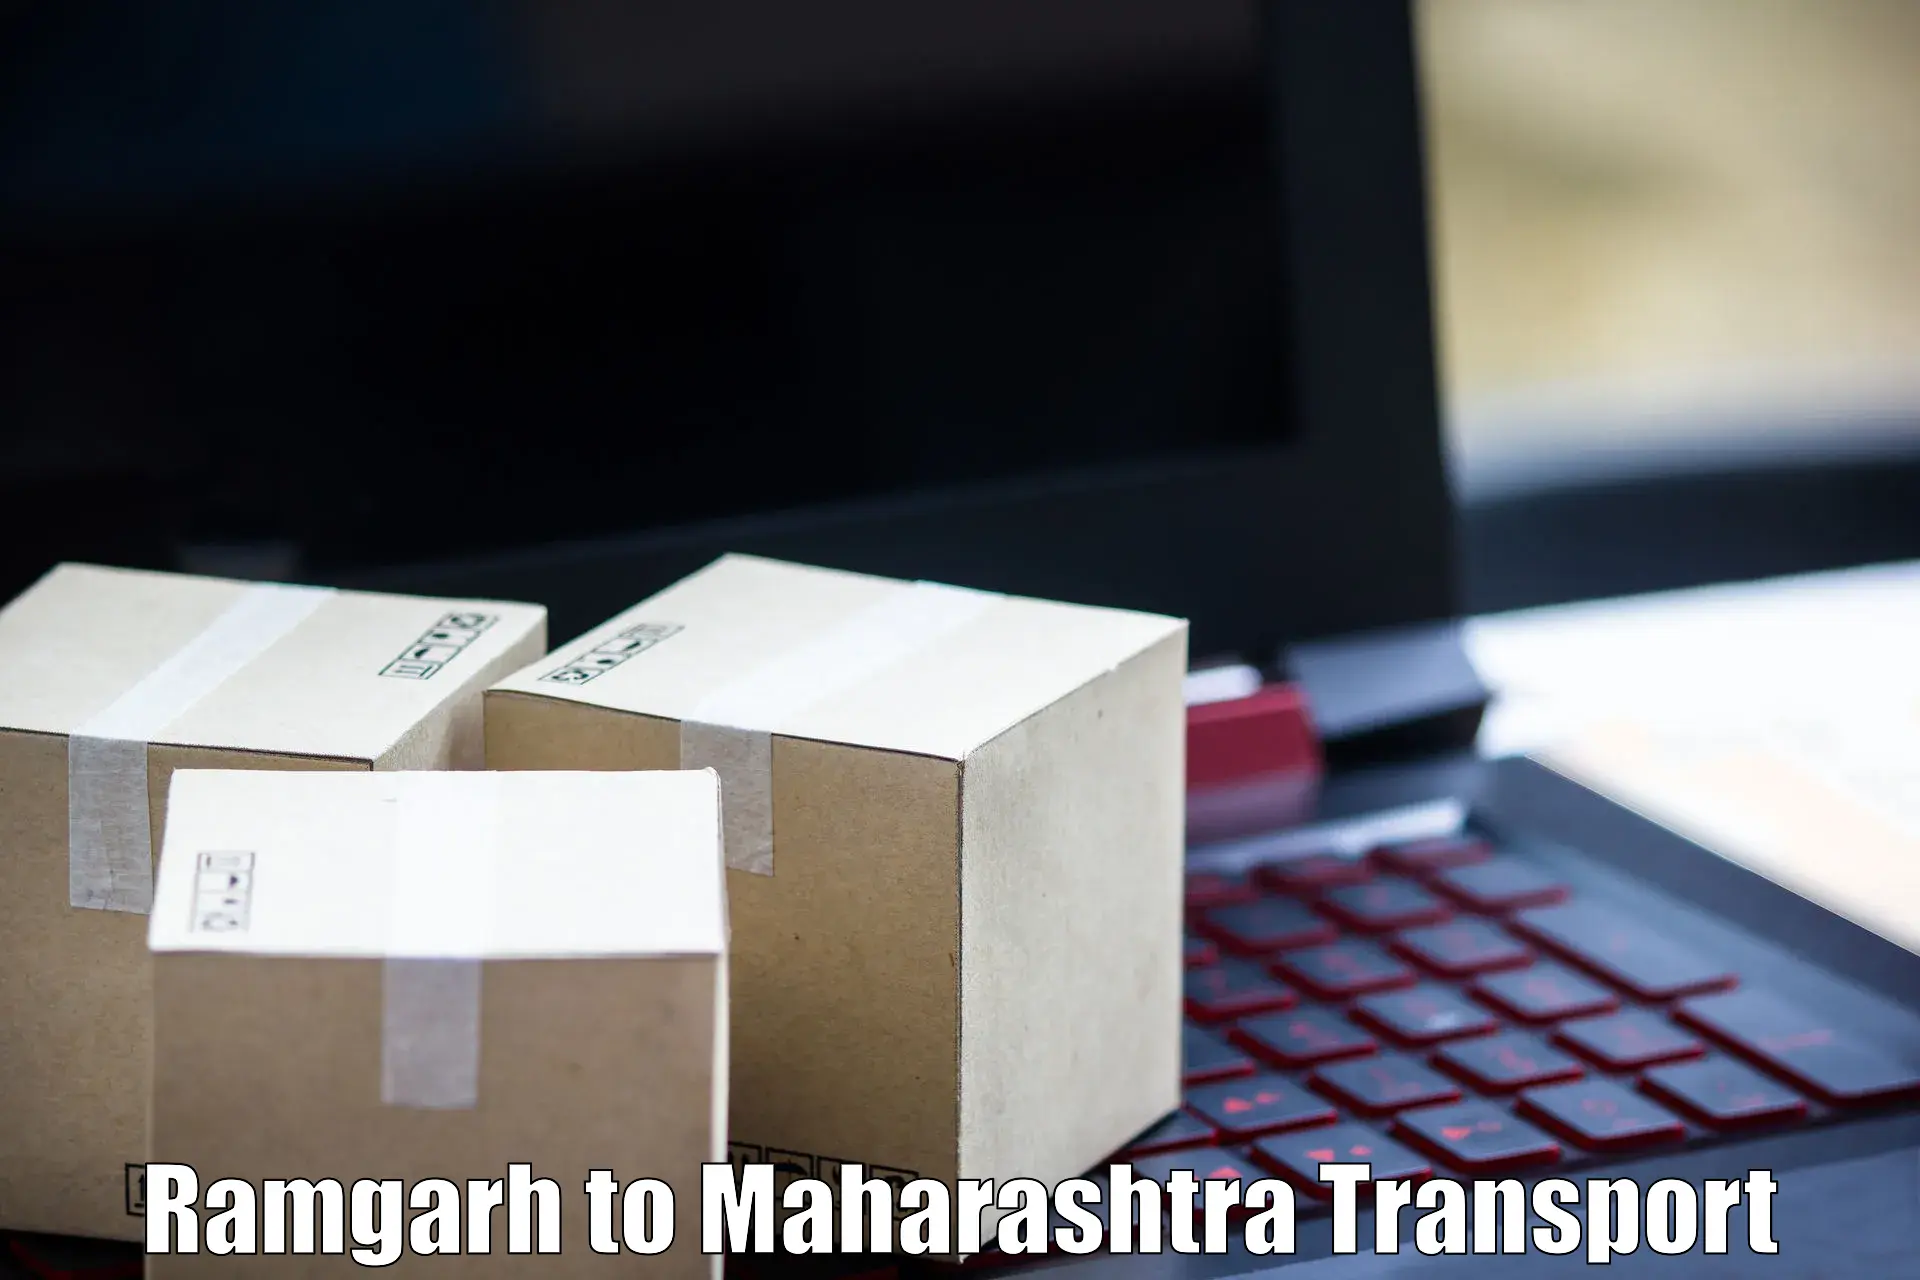 Transport shared services Ramgarh to Gadchiroli